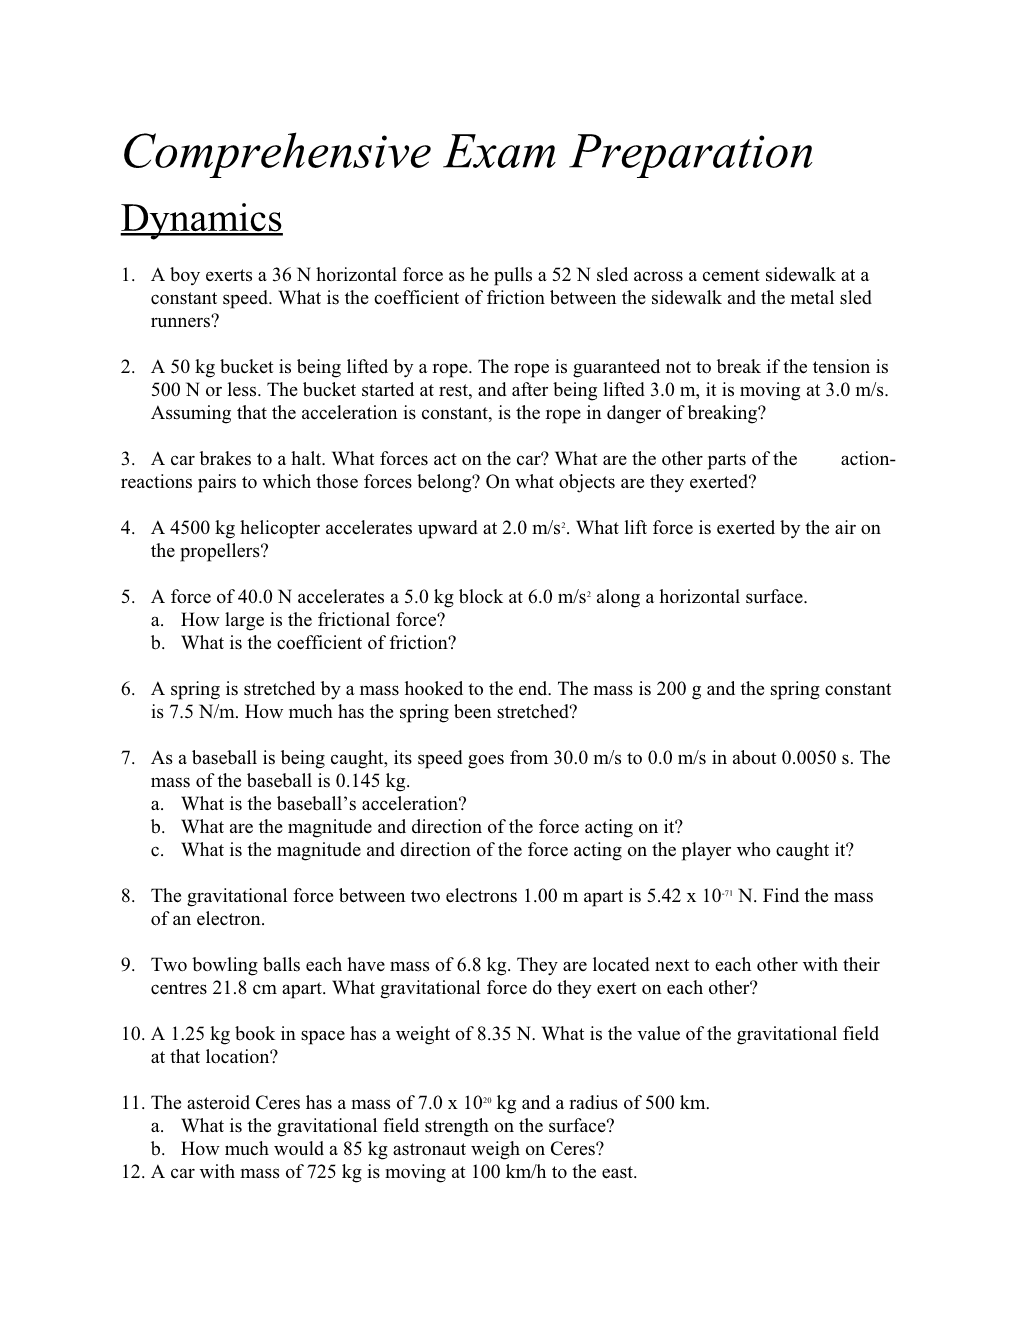 Comprehensive Exam Preparation s1